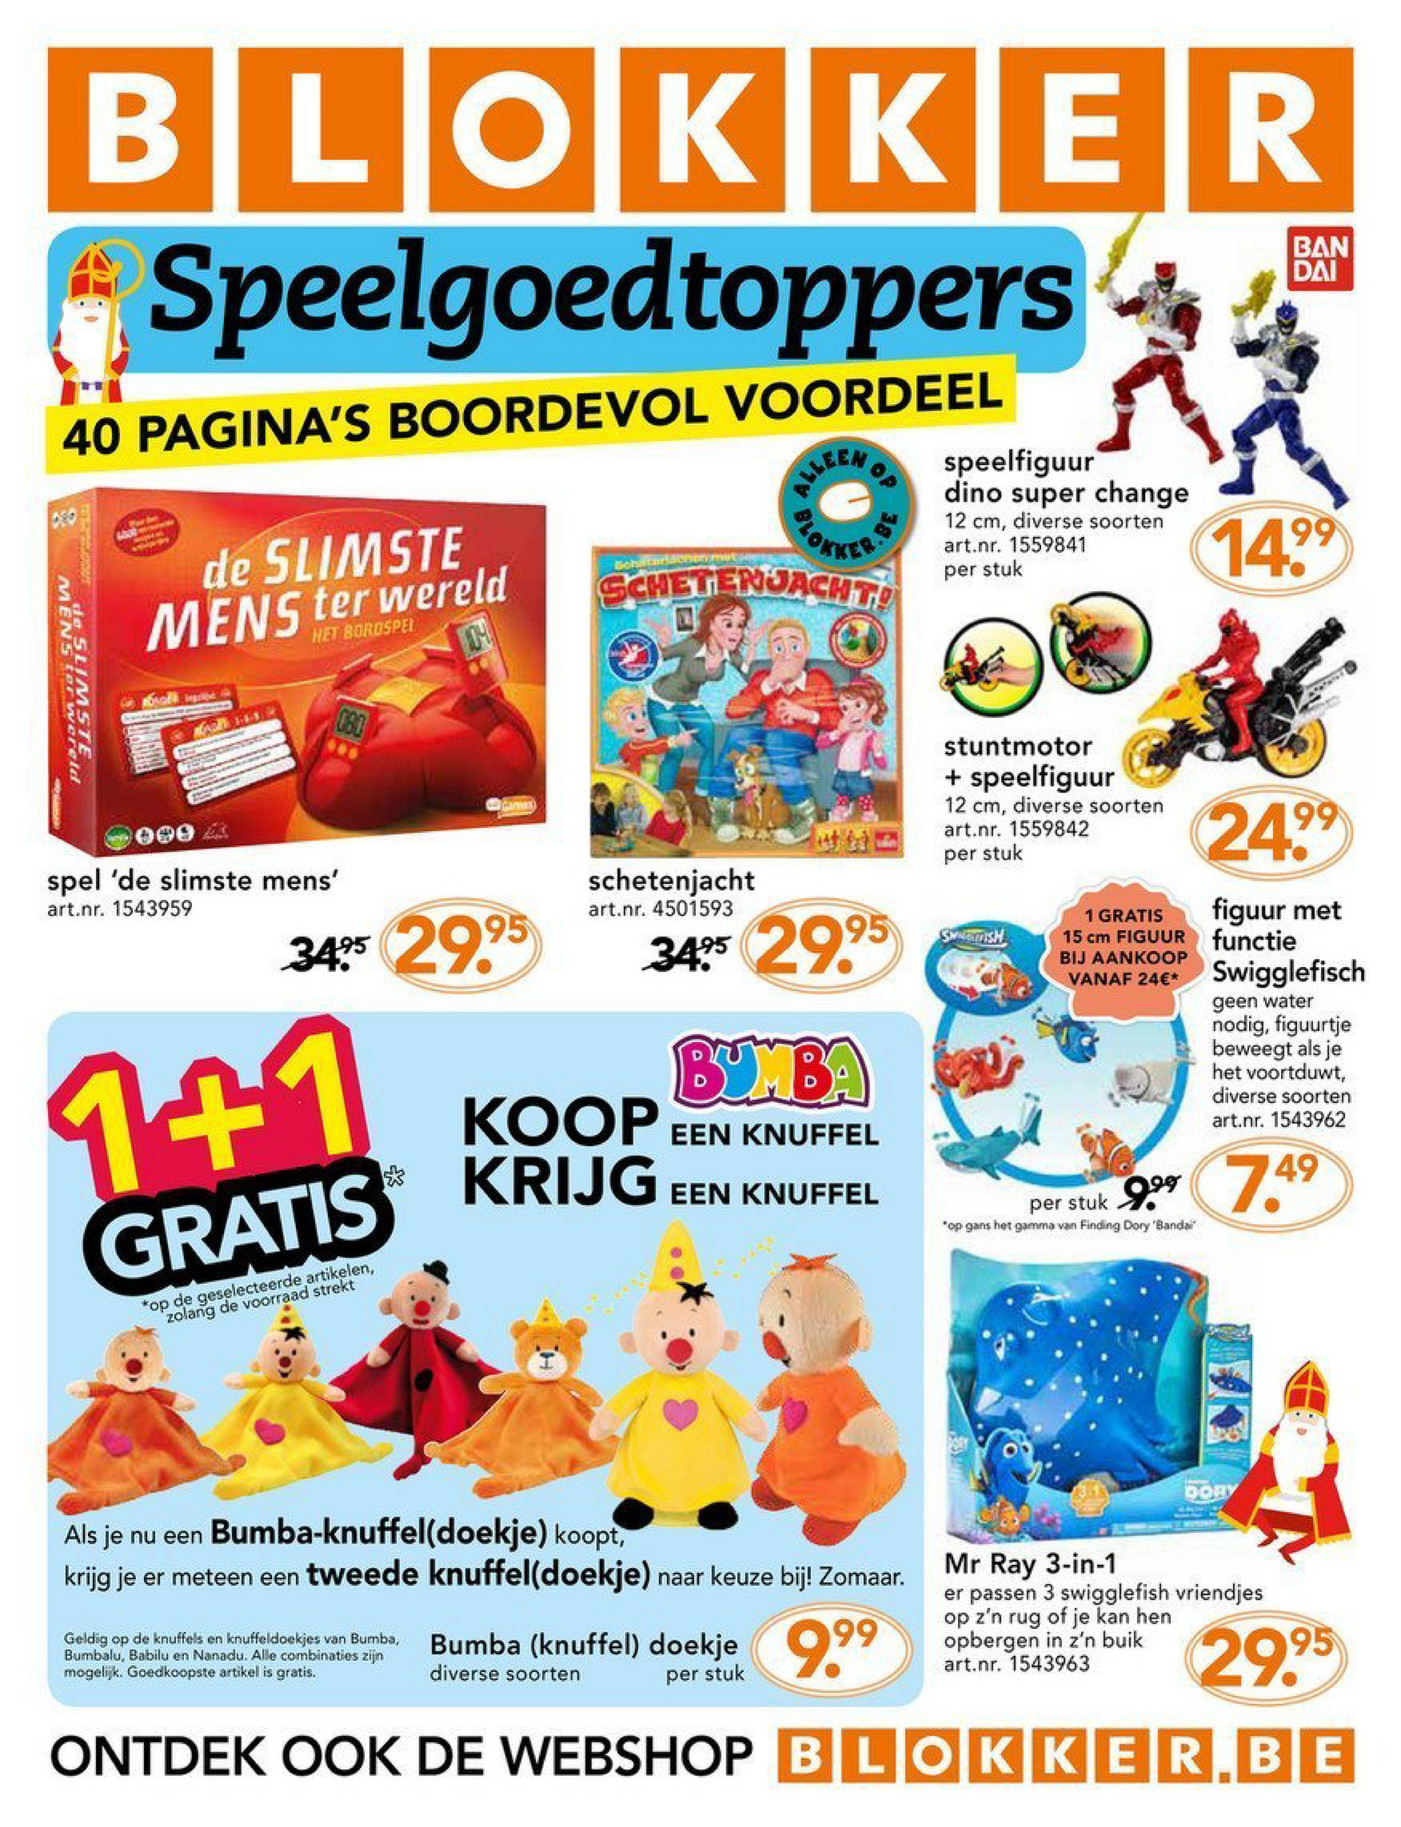 Behoort Wanten Super goed Folderaanbiedingen - Blokker.be speelgoed folder 1 november tm 31 december  2016 - Pagina 2-3